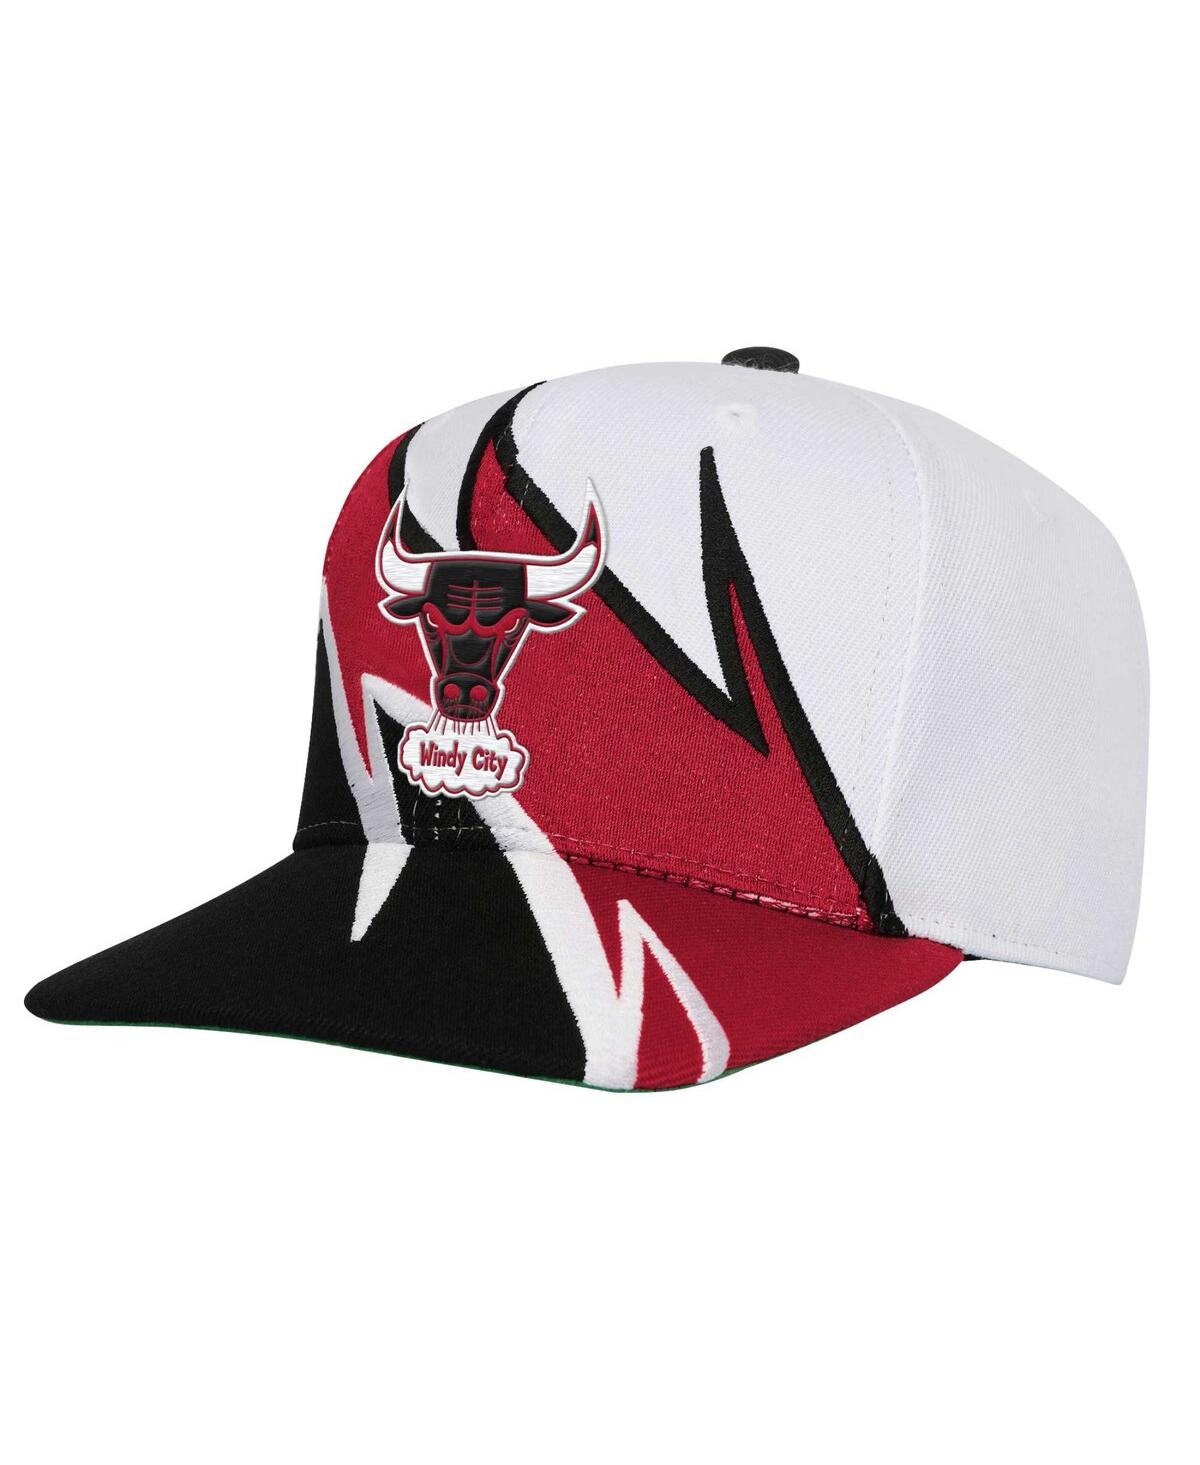 Mitchell Ness Youth White Chicago Bulls Wave Runner Snapback Hat - White Red